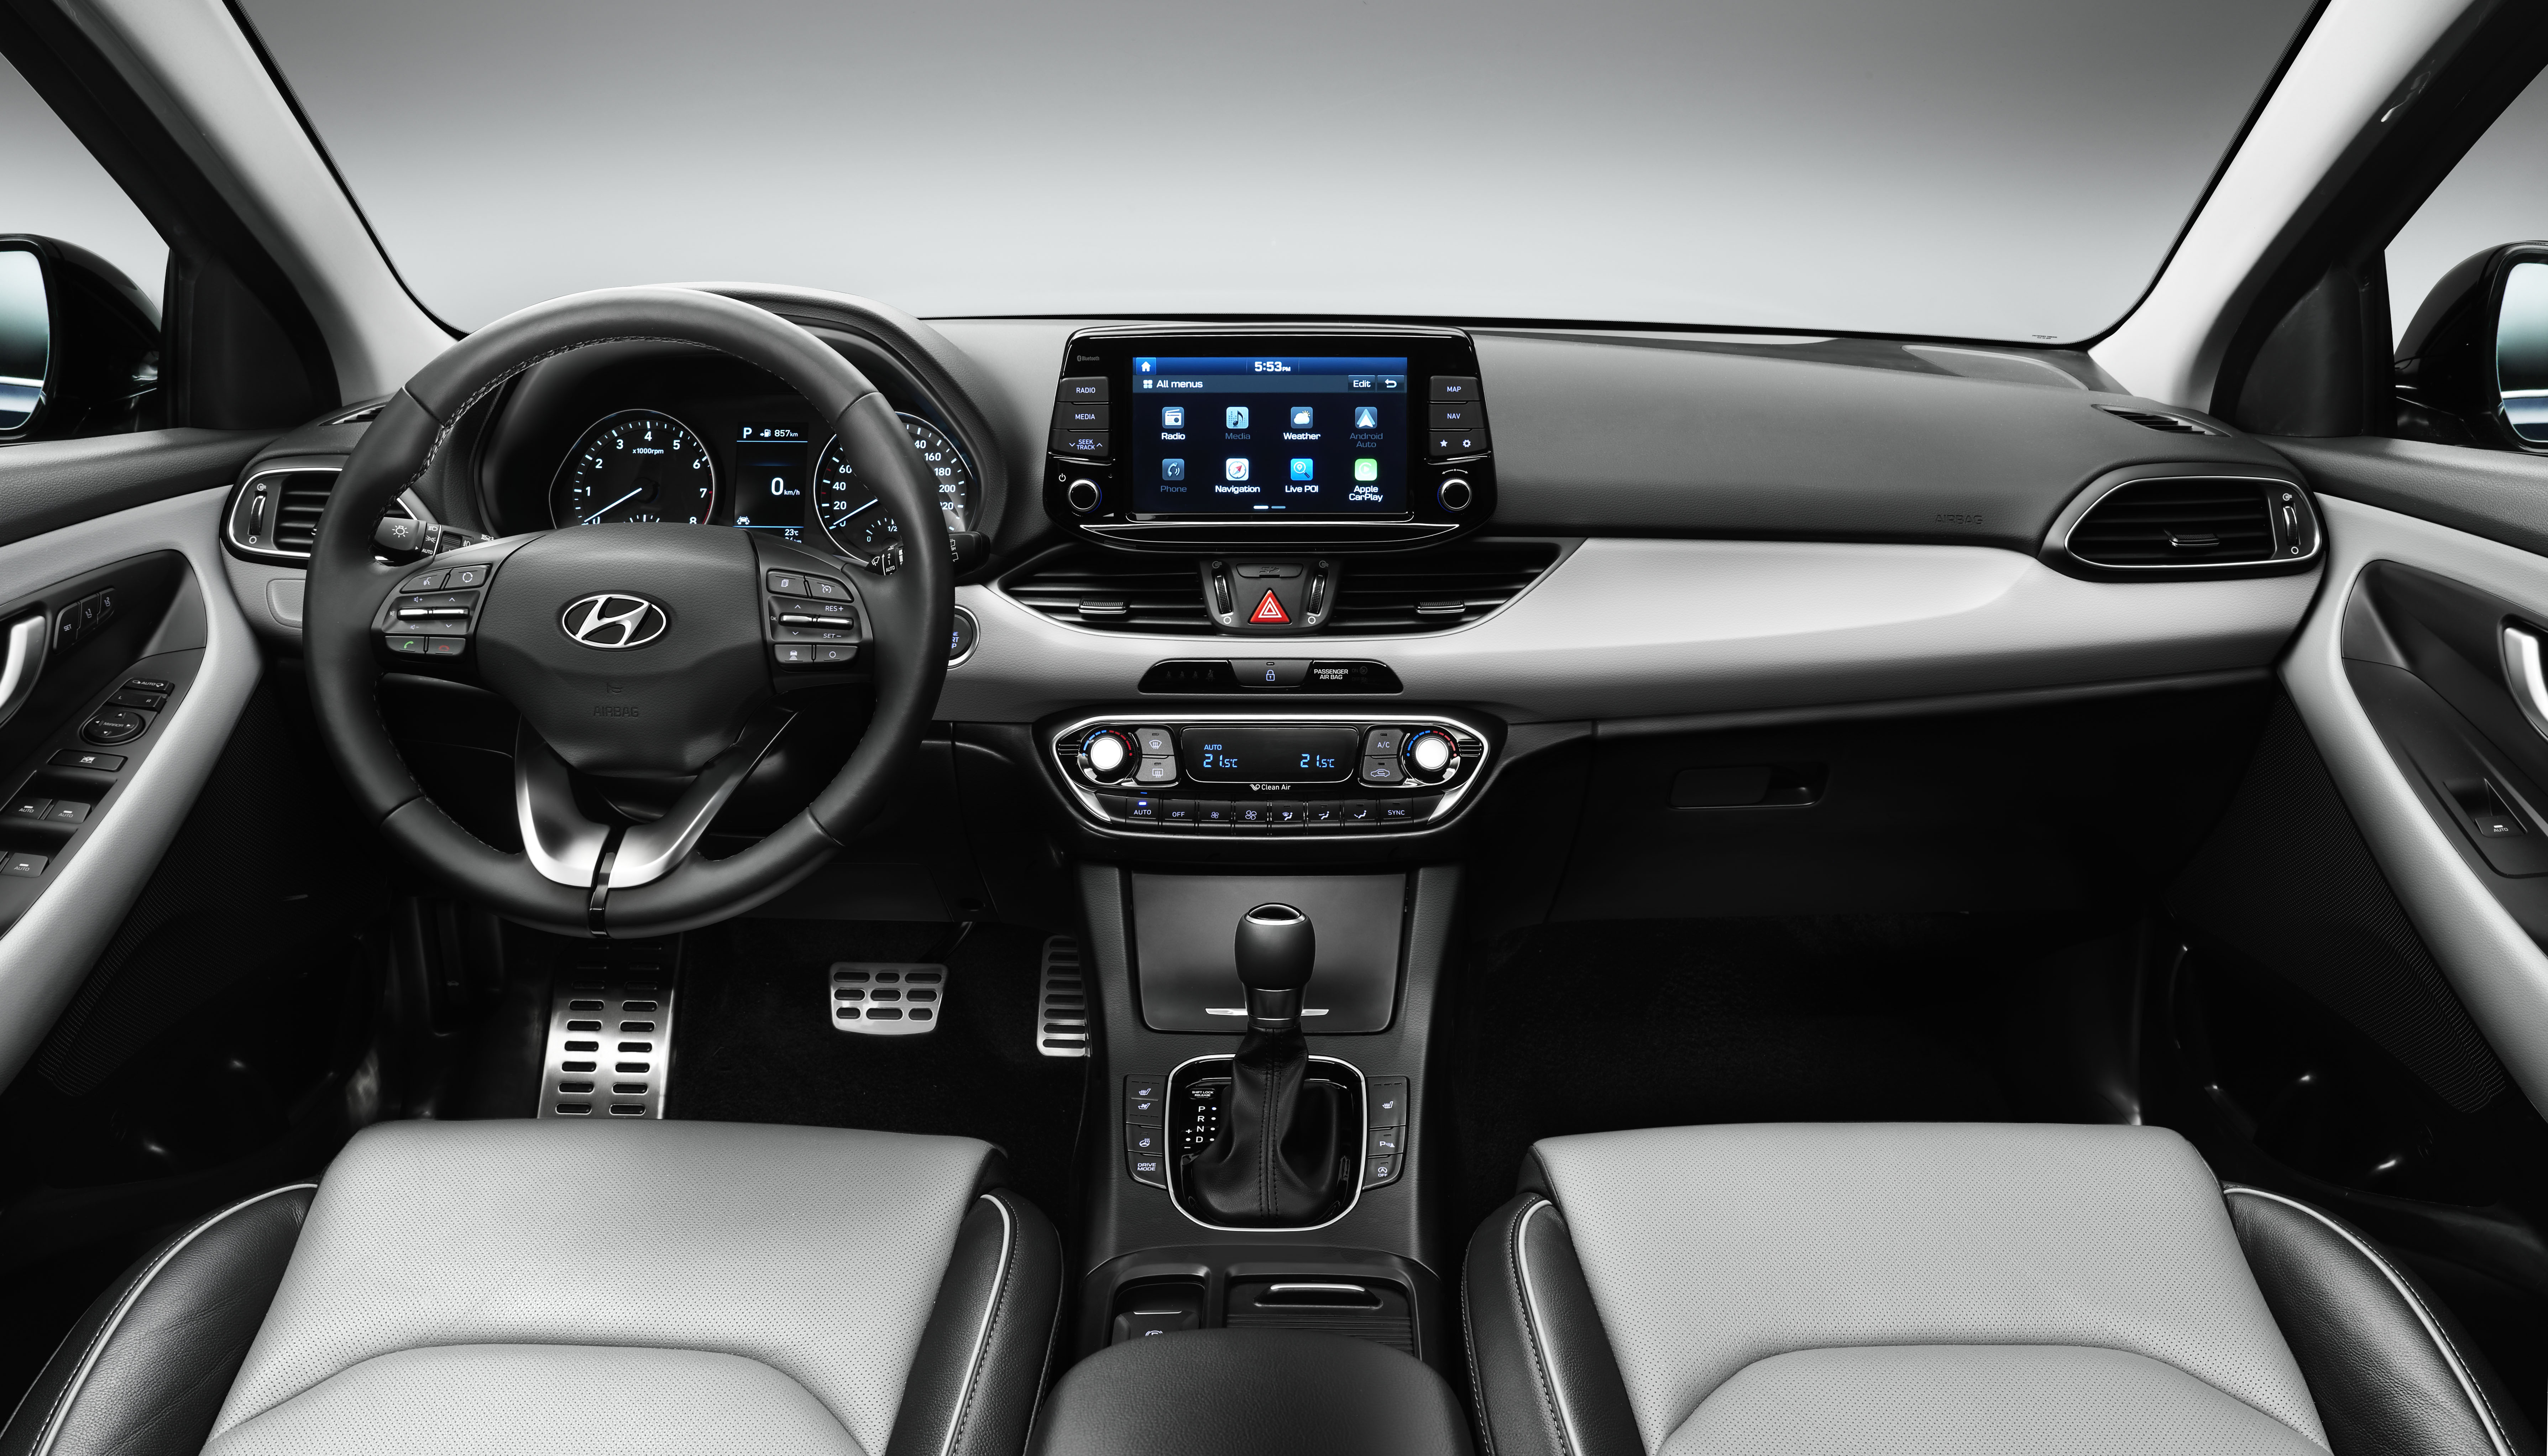 hyundai-i30-new-generation-interior-bicolor.jpg